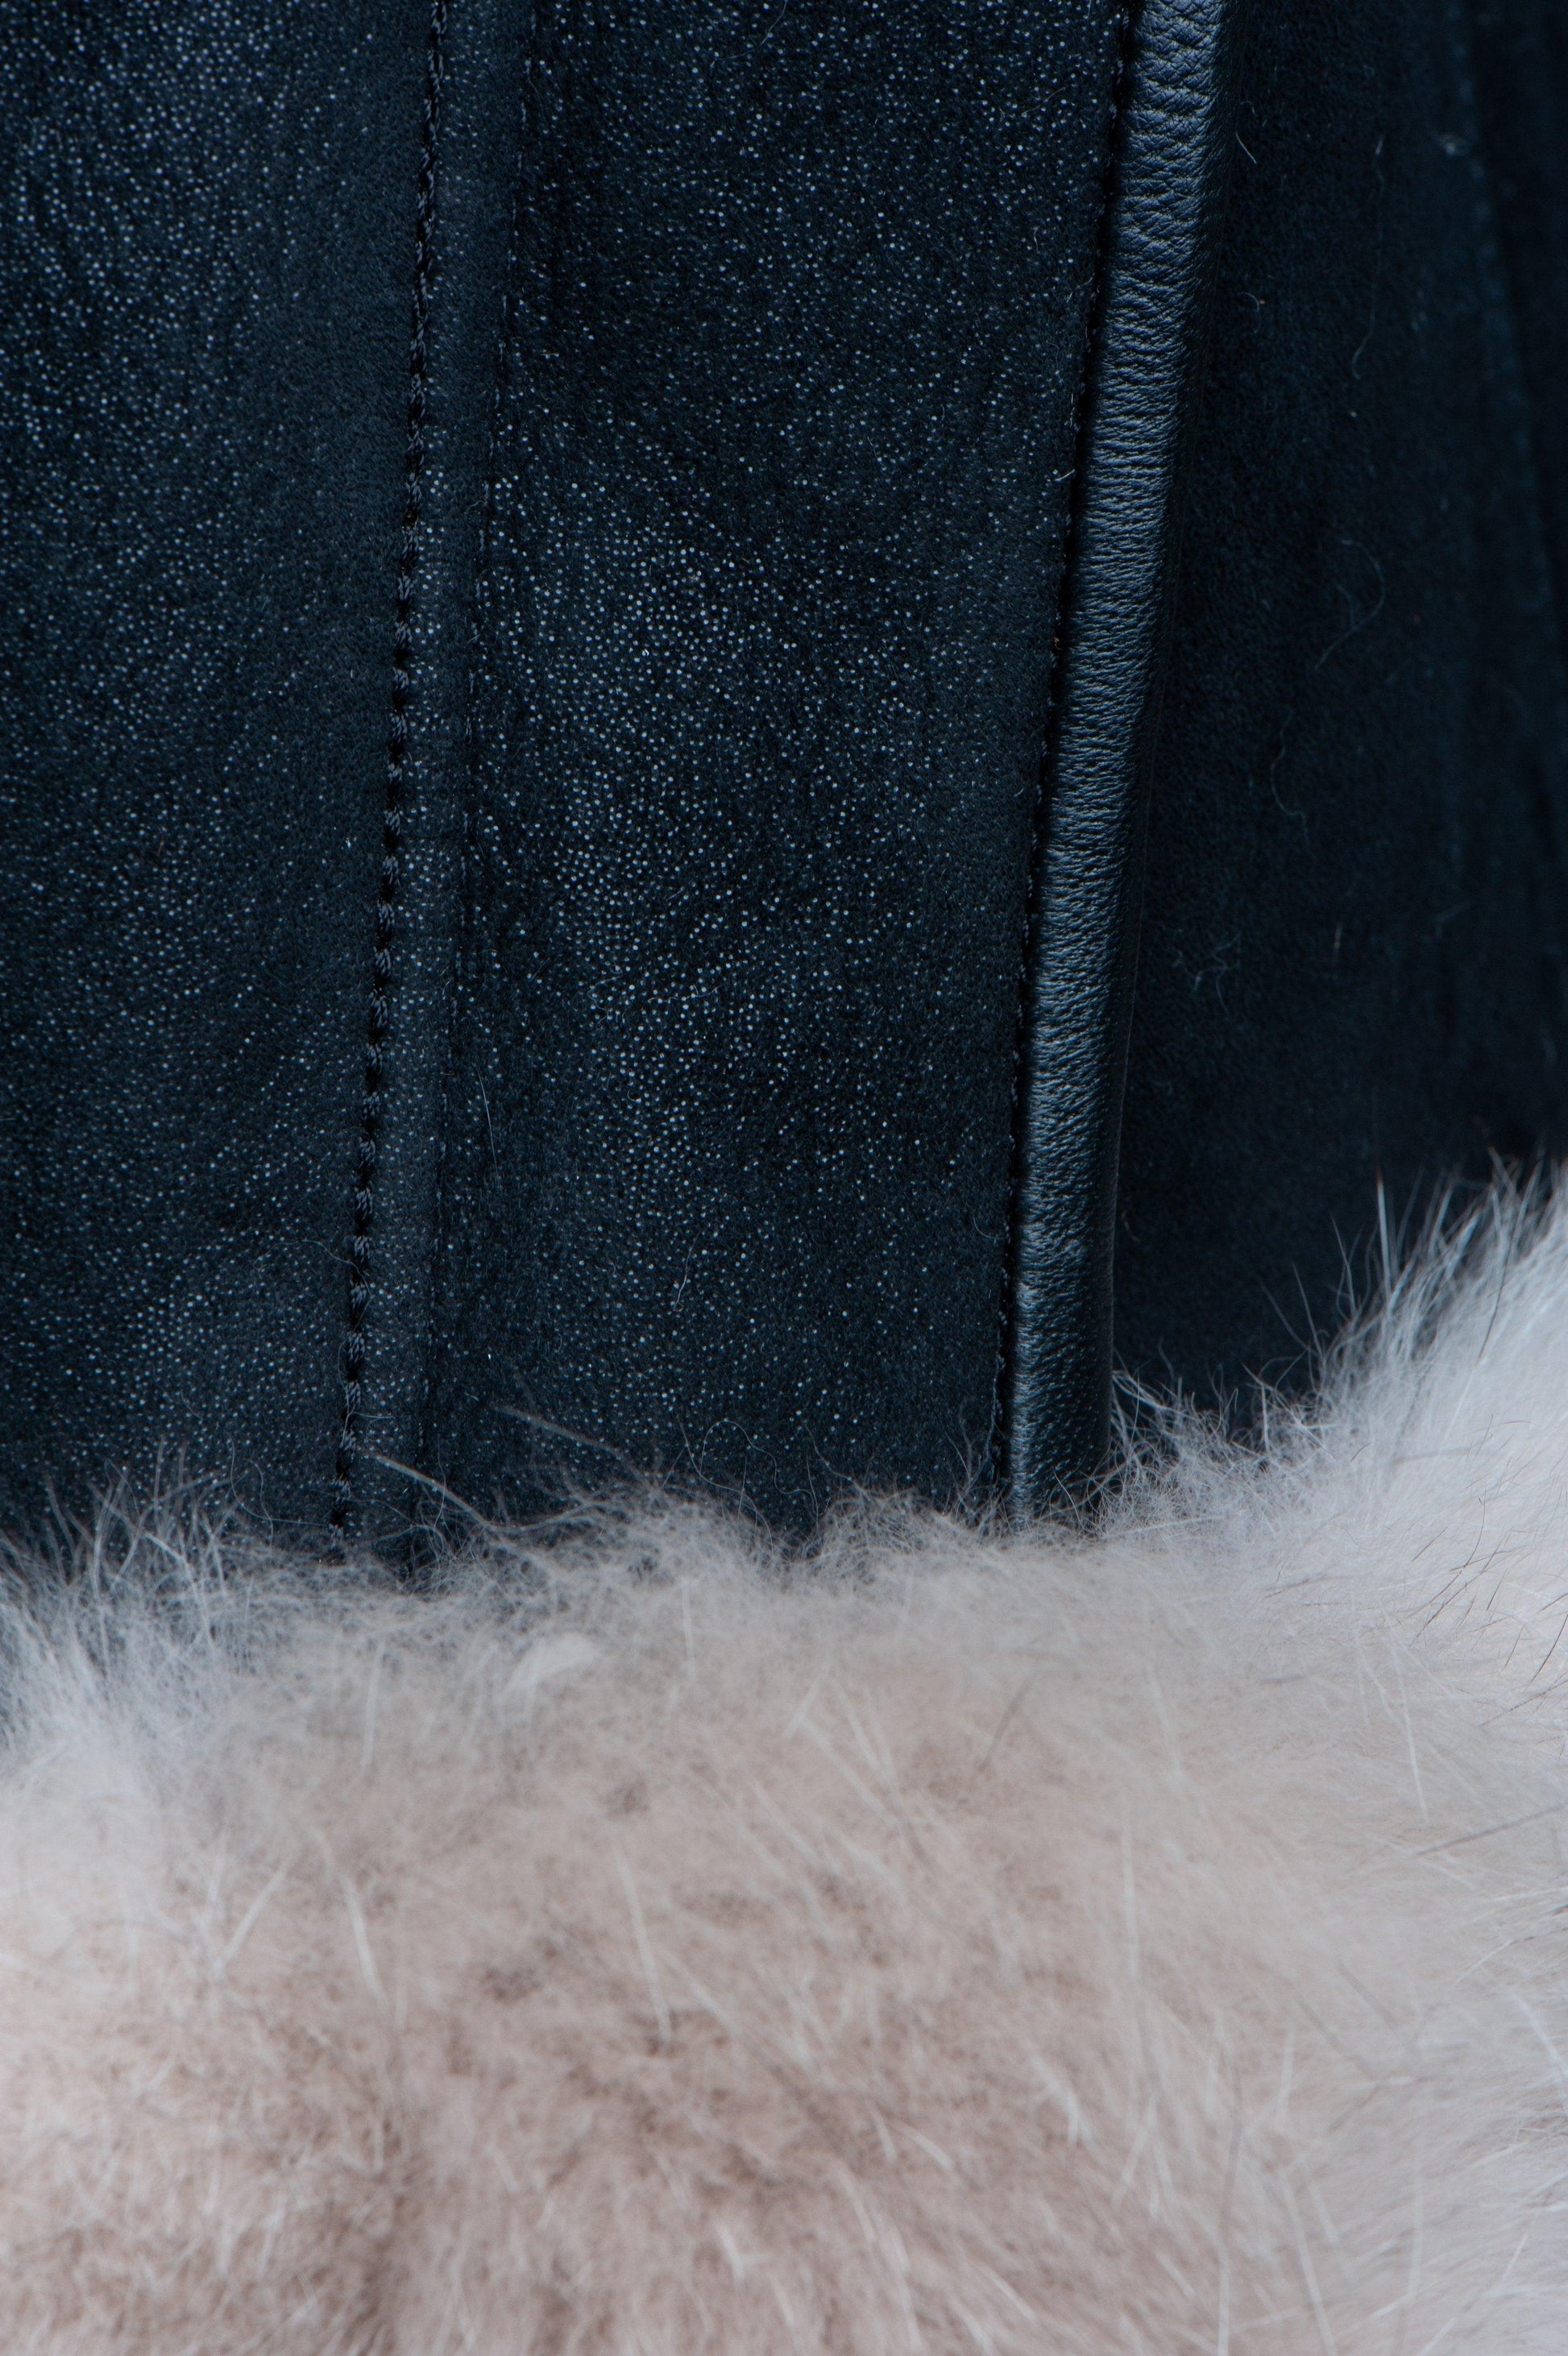 Black Shearling Sheepskin Jacket with Fox fur trim For Women - Leather Loom